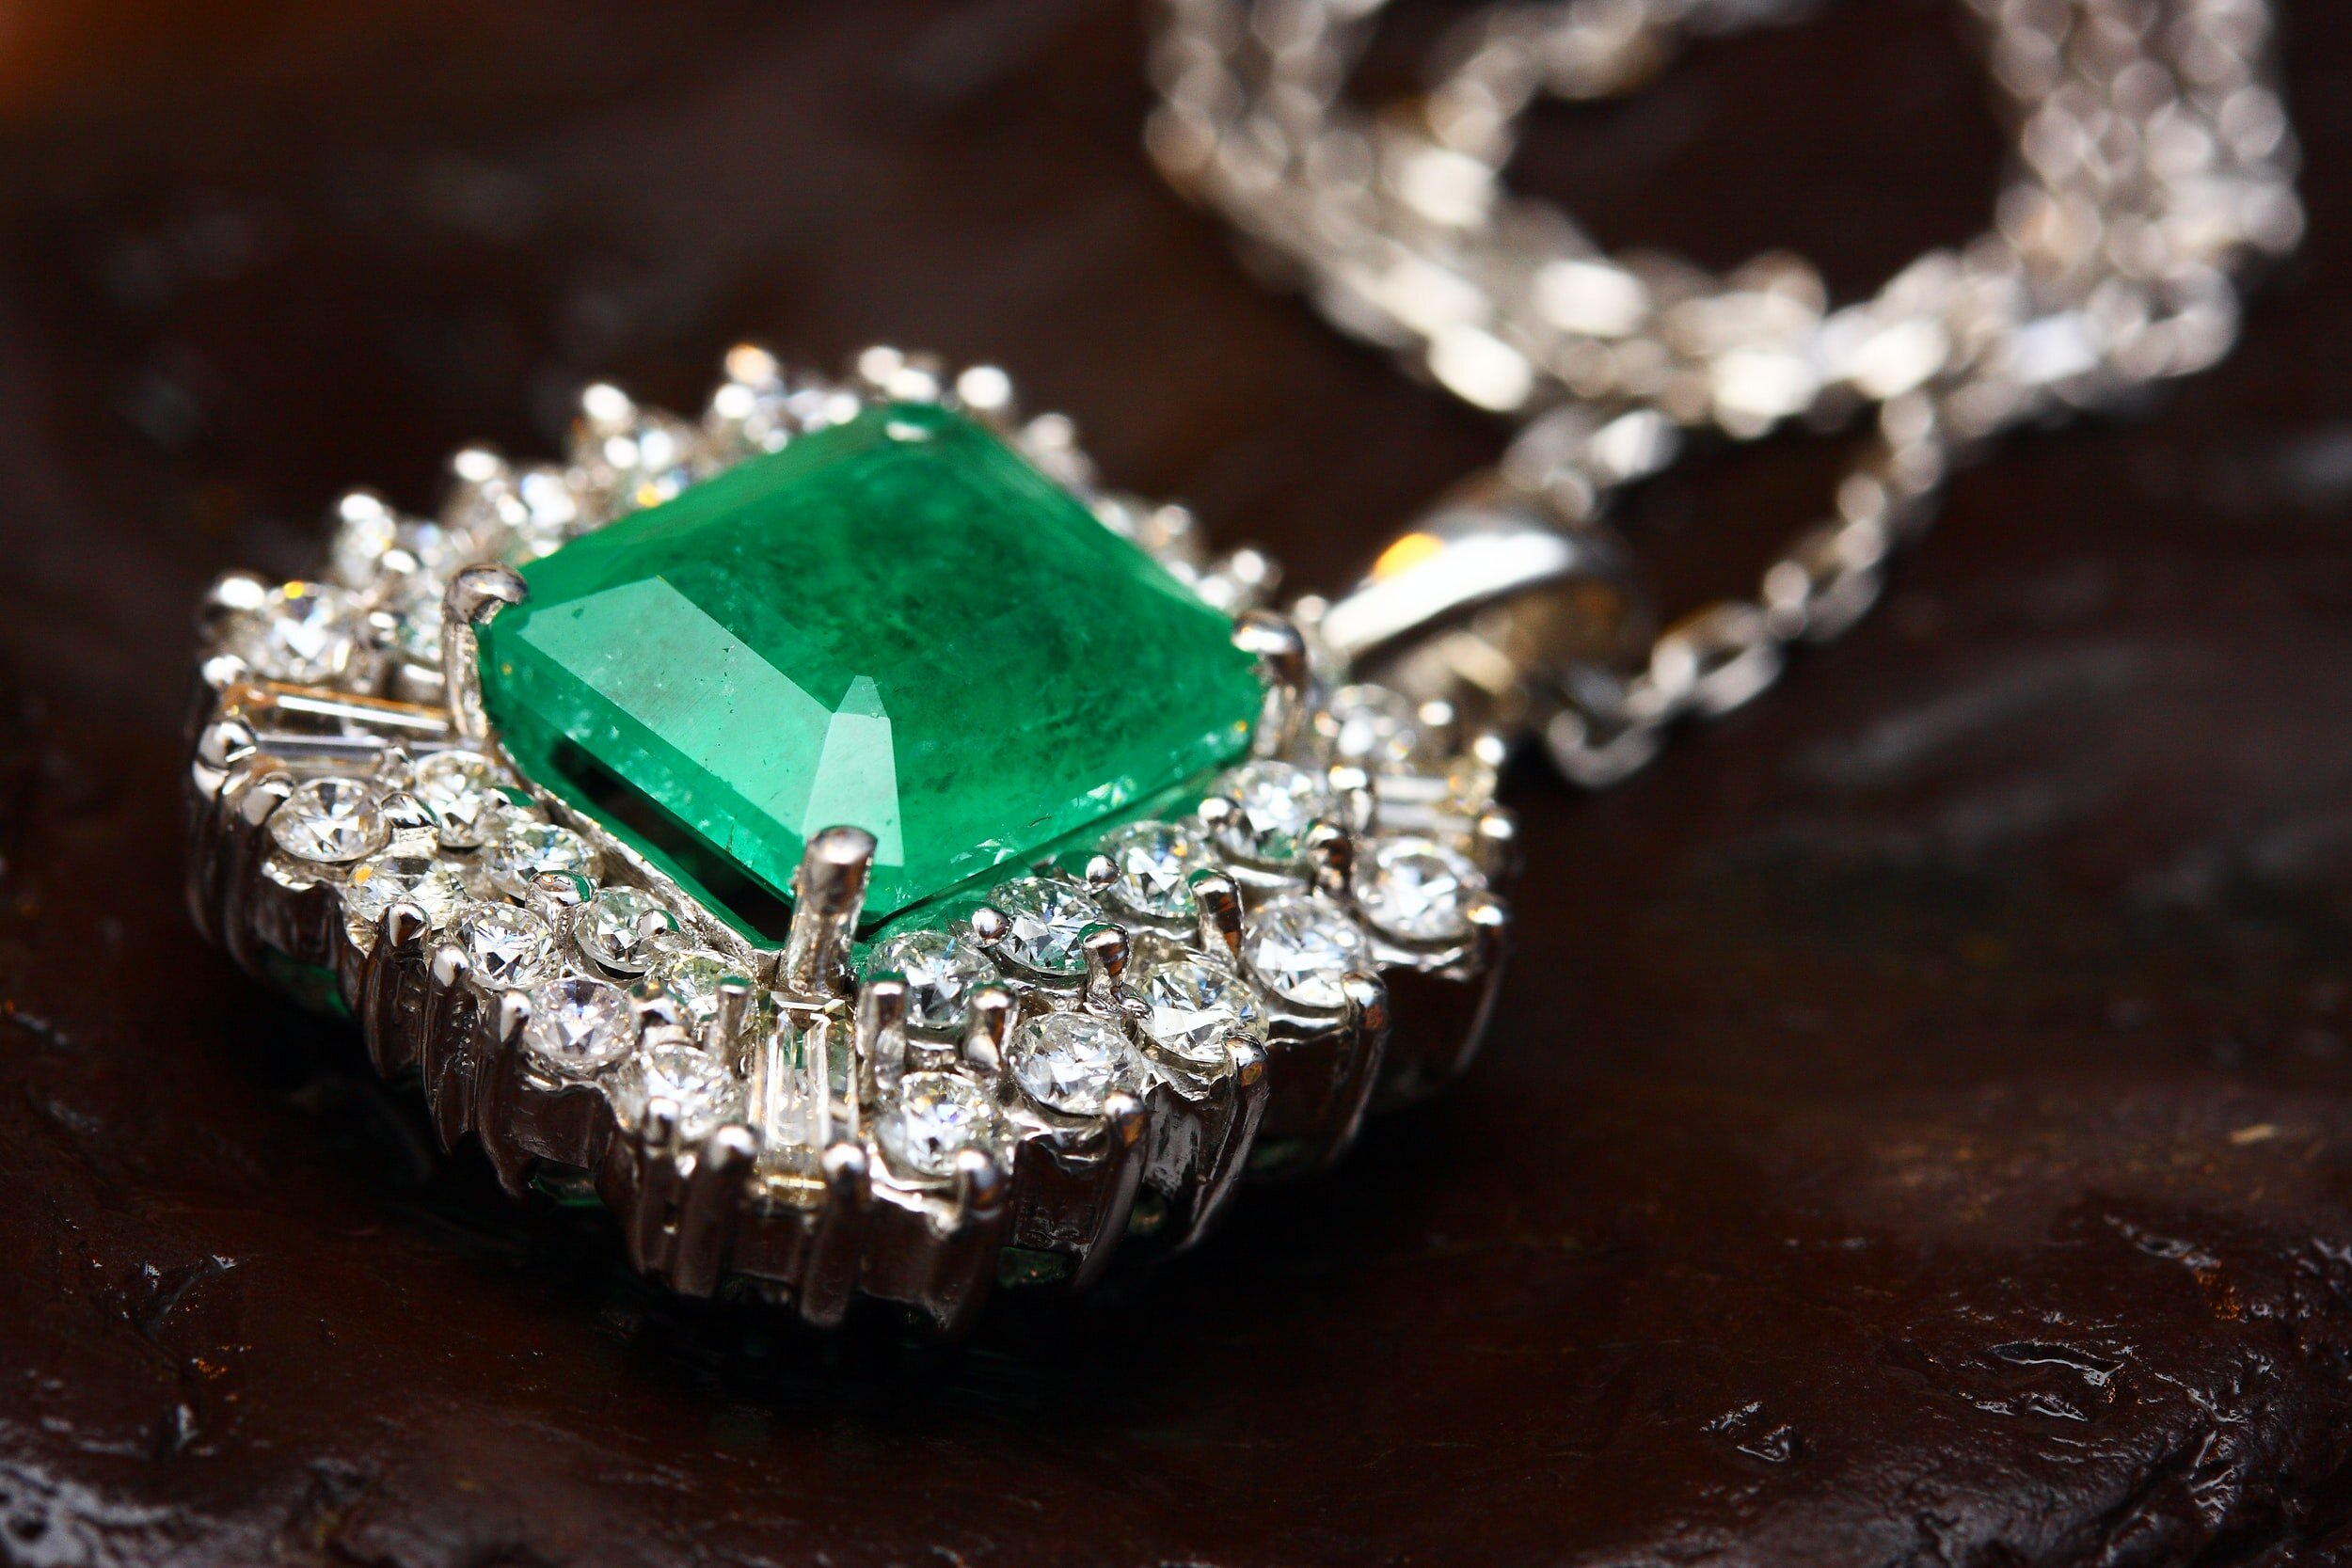 SELL MY DIAMOND NECKLACE - Buy My Jewellery